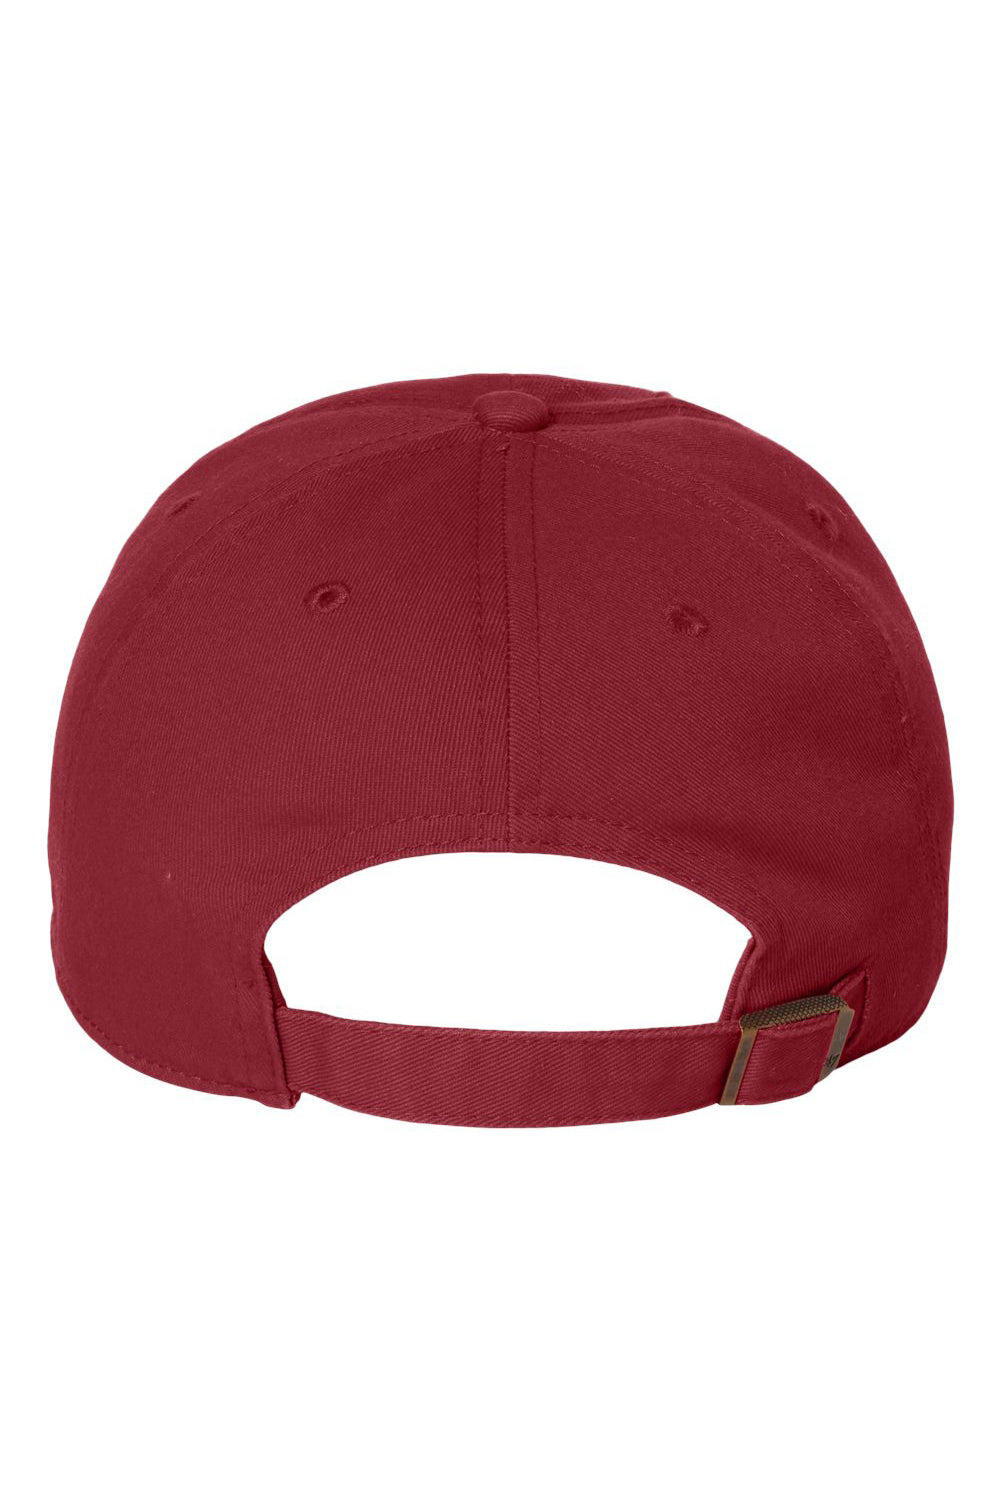 47 Brand 4700 Mens Clean Up Adjustable Hat Cardinal Red Flat Back